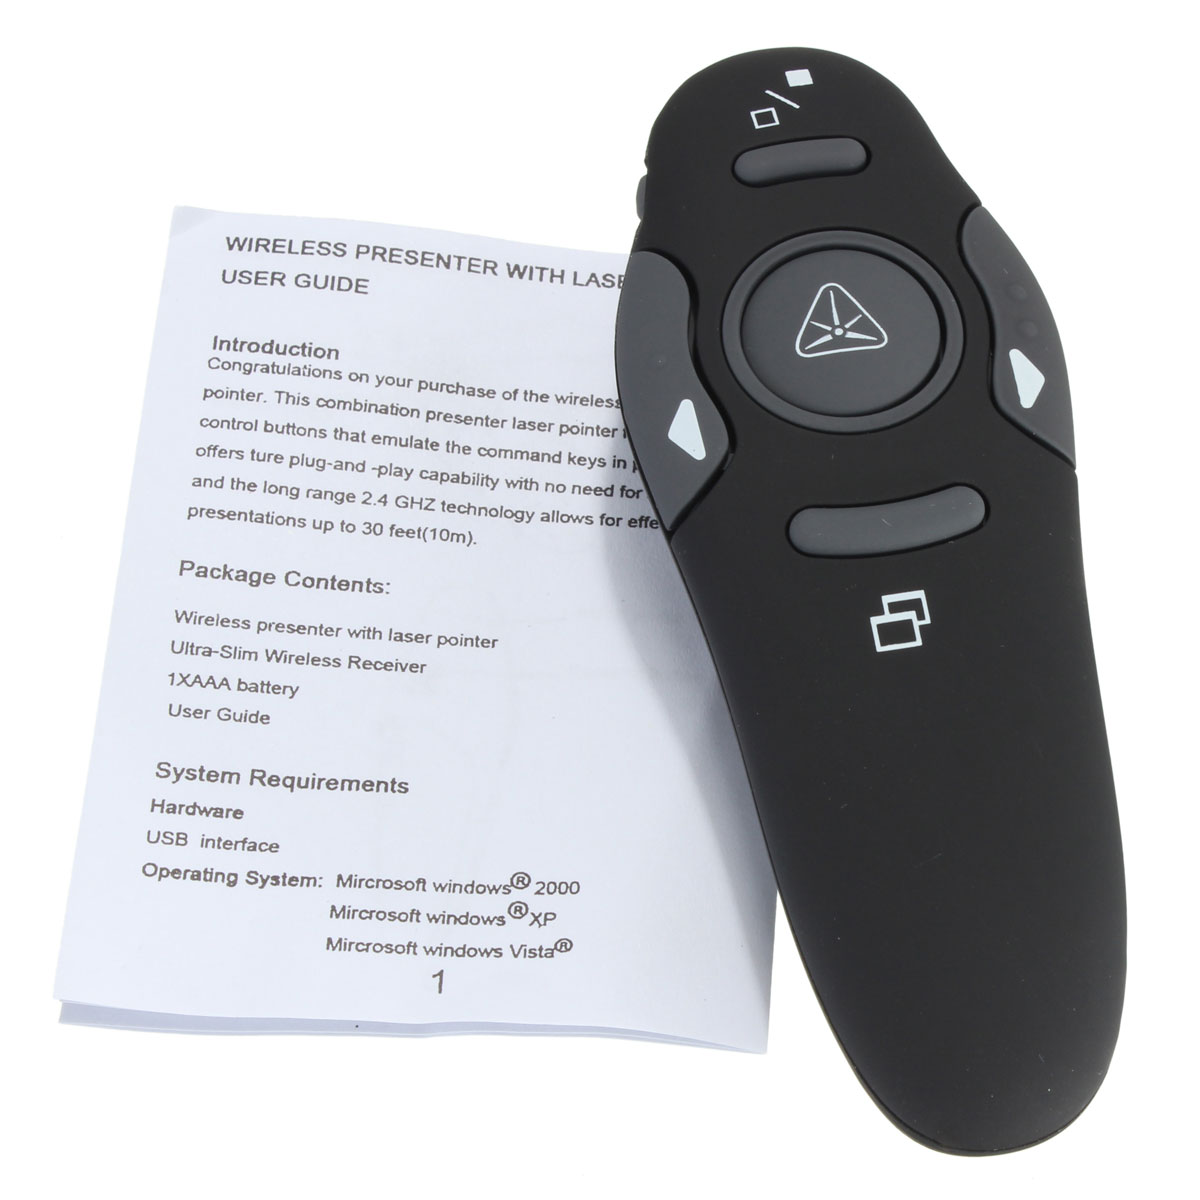 24G-Wireless-Controller-Laser-Pointer-Presenter-for-PPT-Presentation-Meeting-Speech-1011421